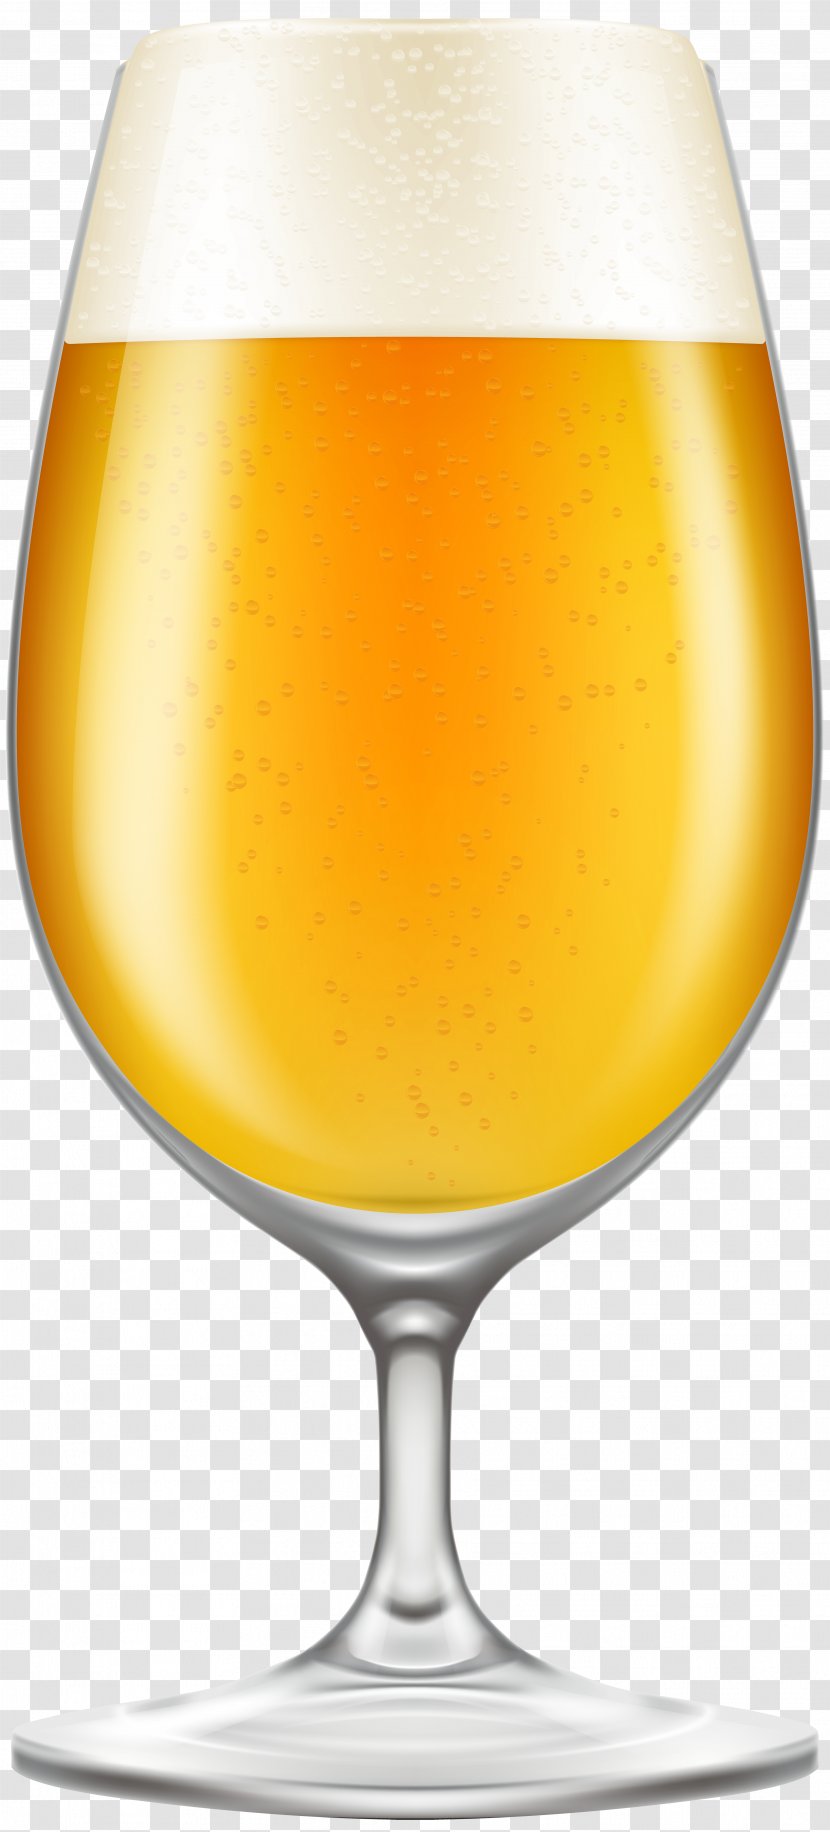 Beer Glasses Stout Drink Ale - Glass Transparent PNG